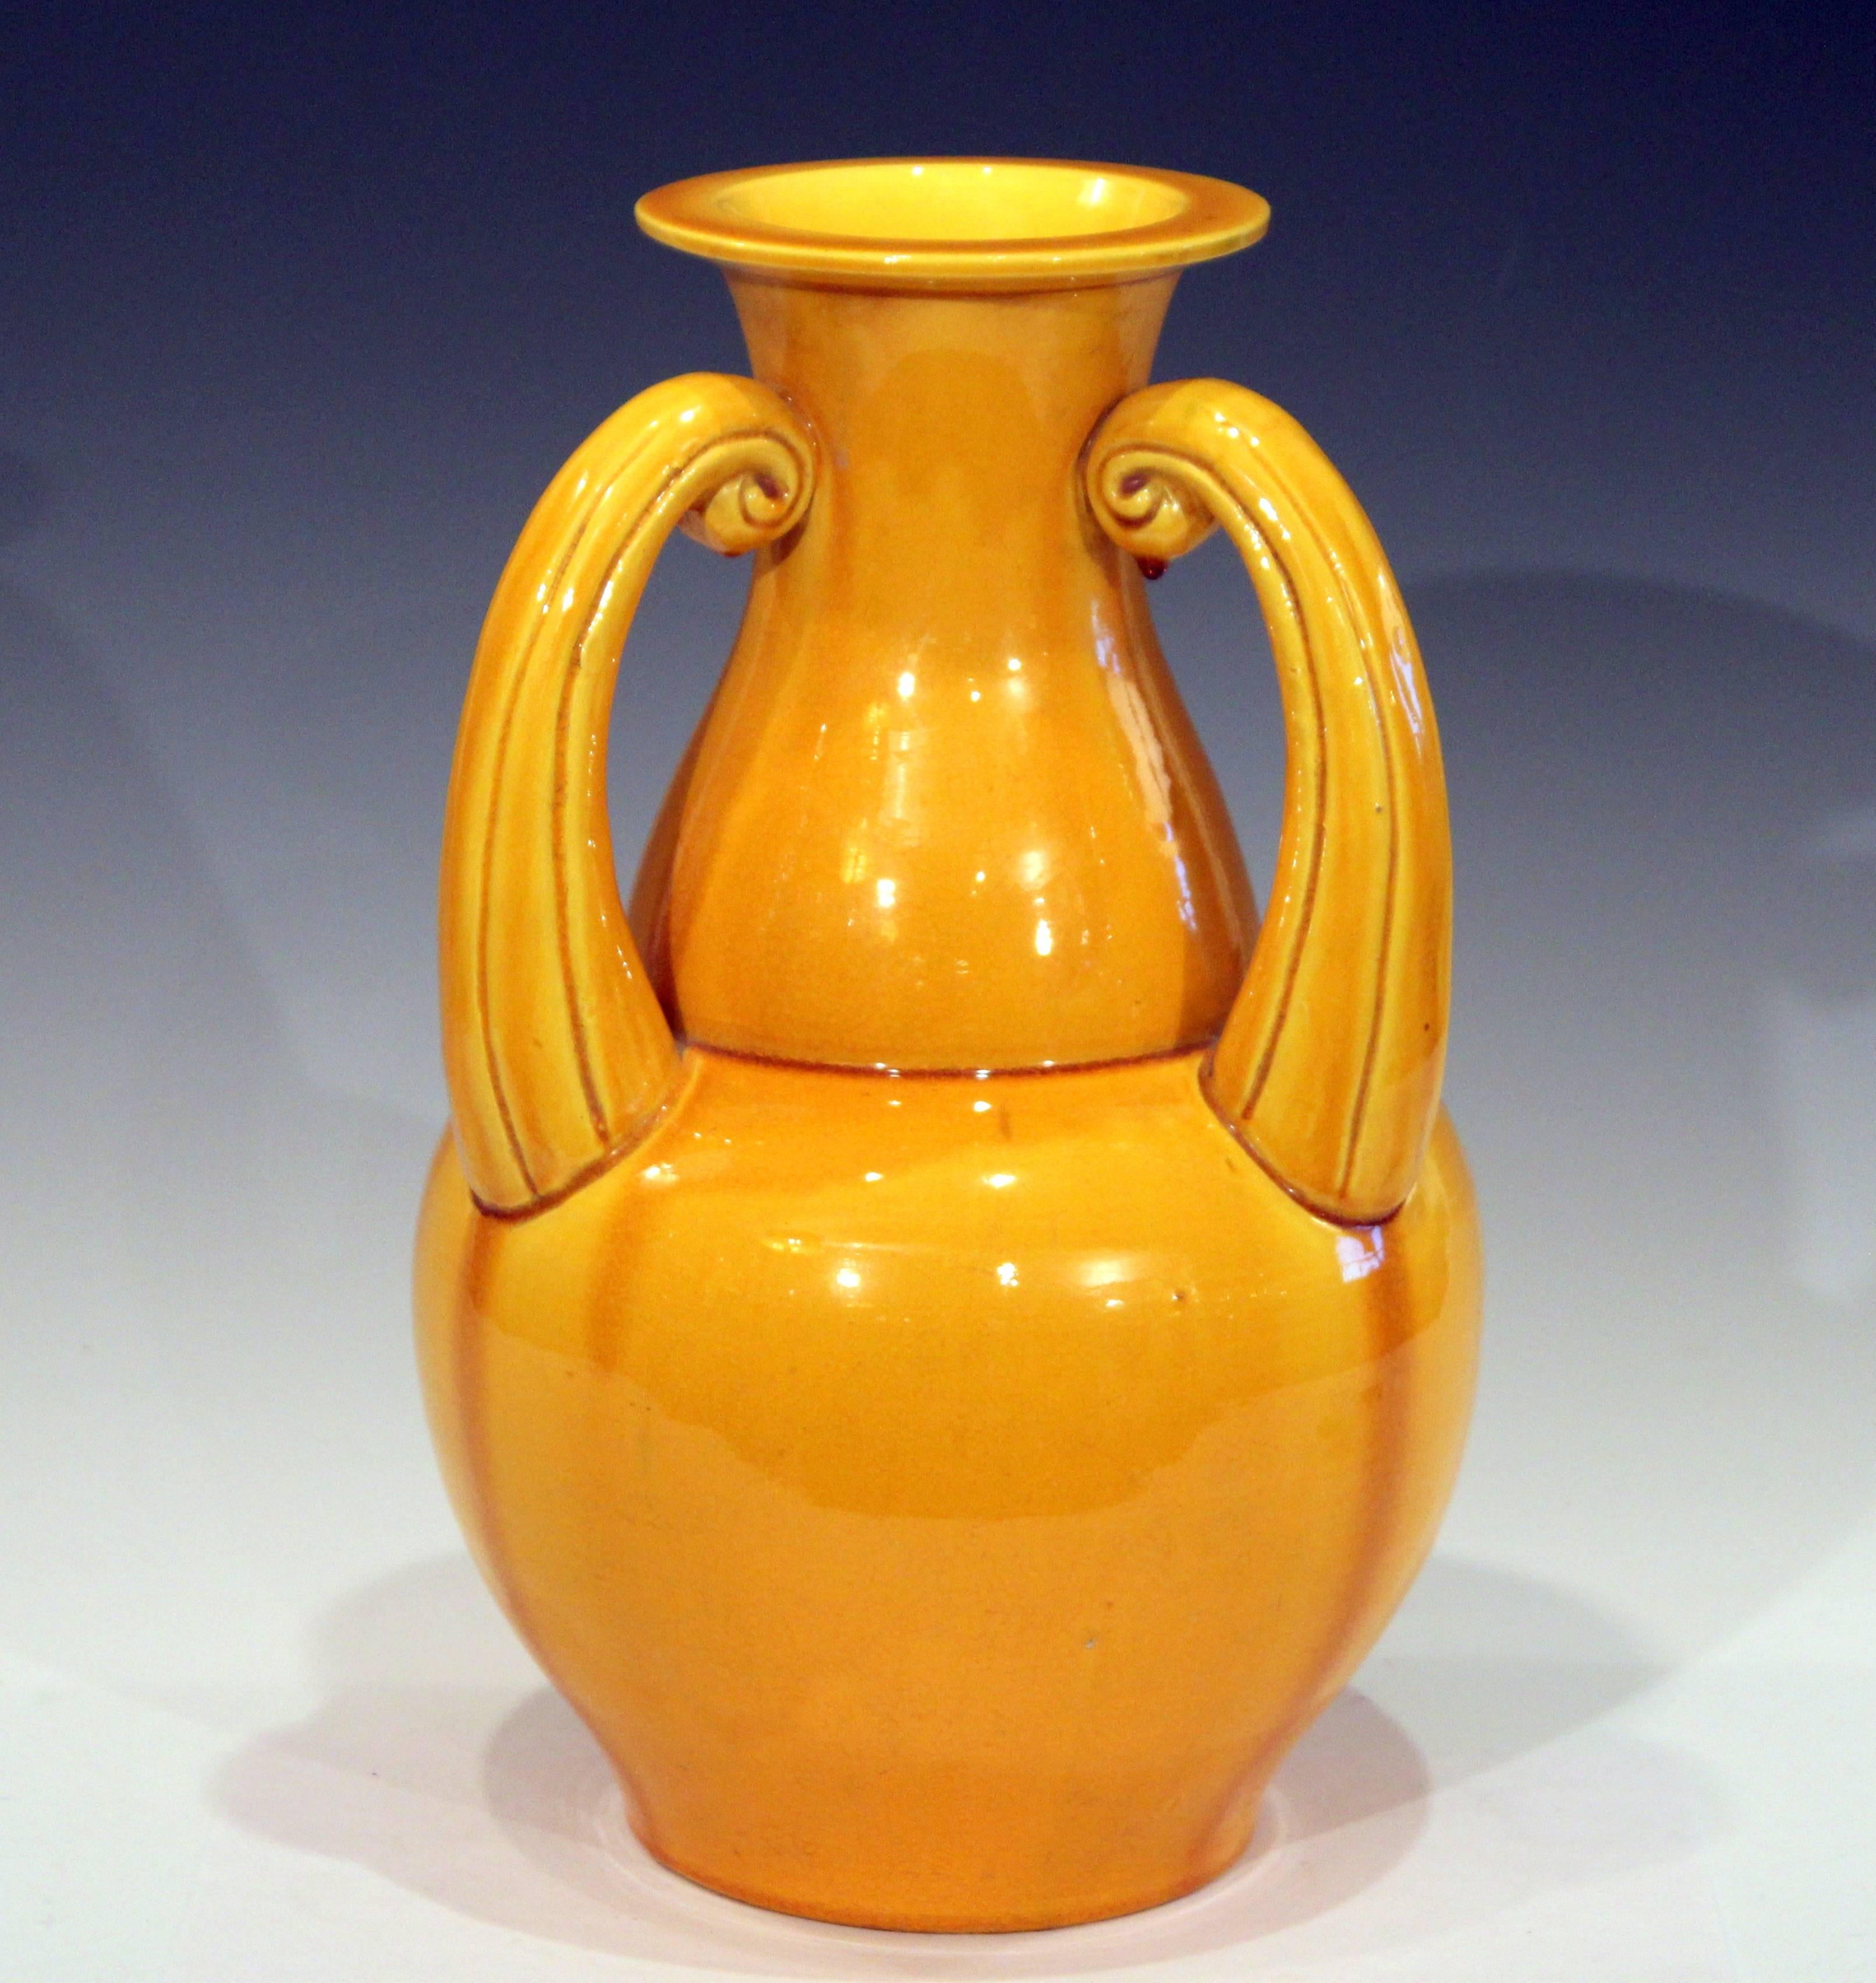 Turned Awaji Pottery Vintage Japanese Studio Yellow Crackle Glaze Organic Gourd Vase For Sale